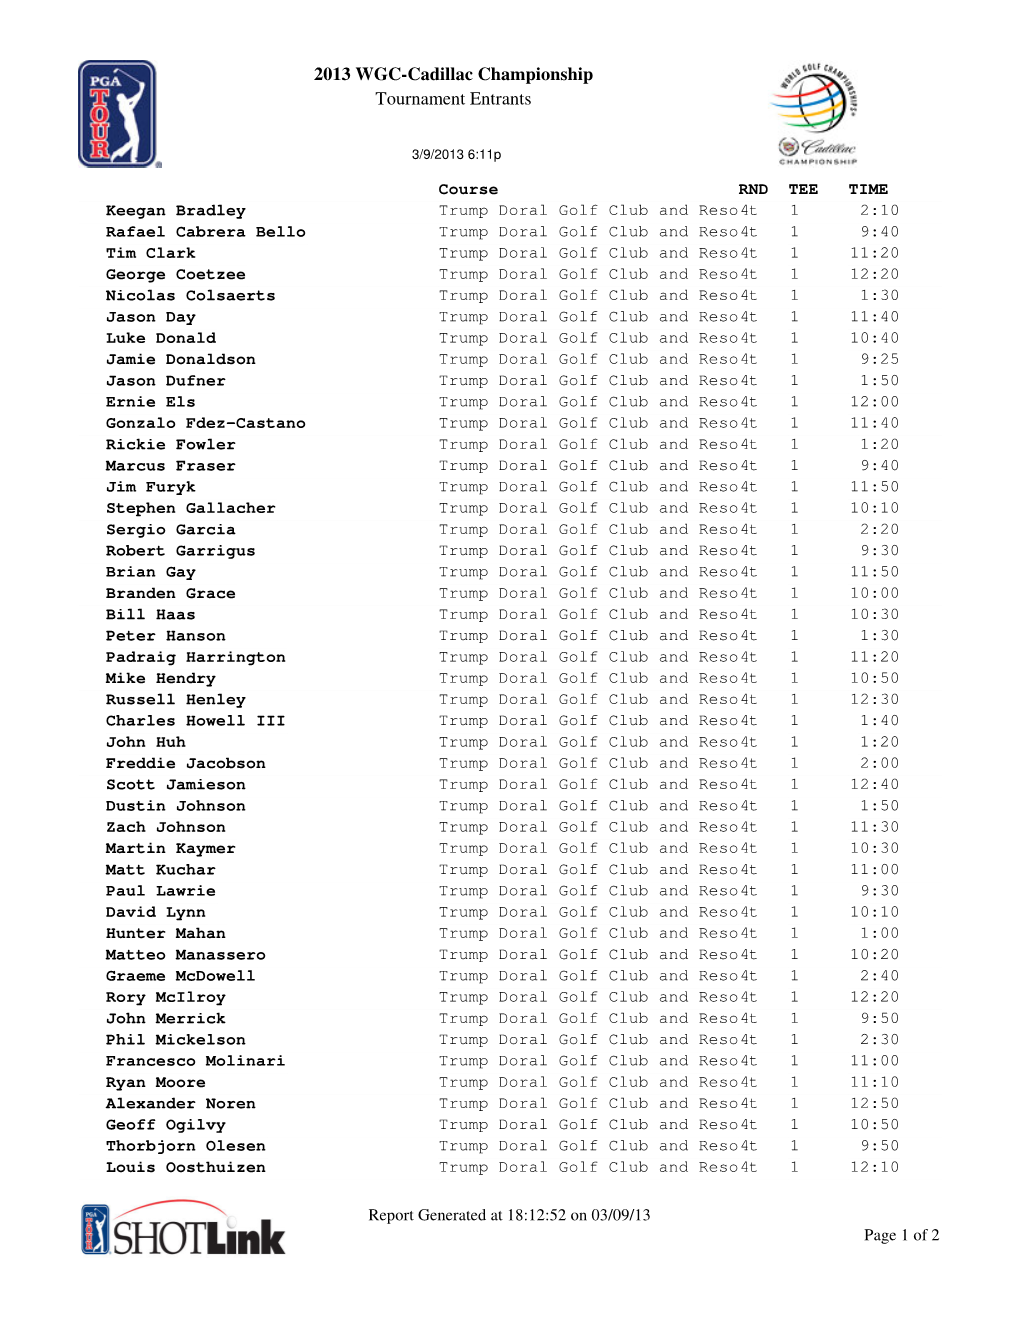 2013 WGC-Cadillac Championship Tournament Entrants